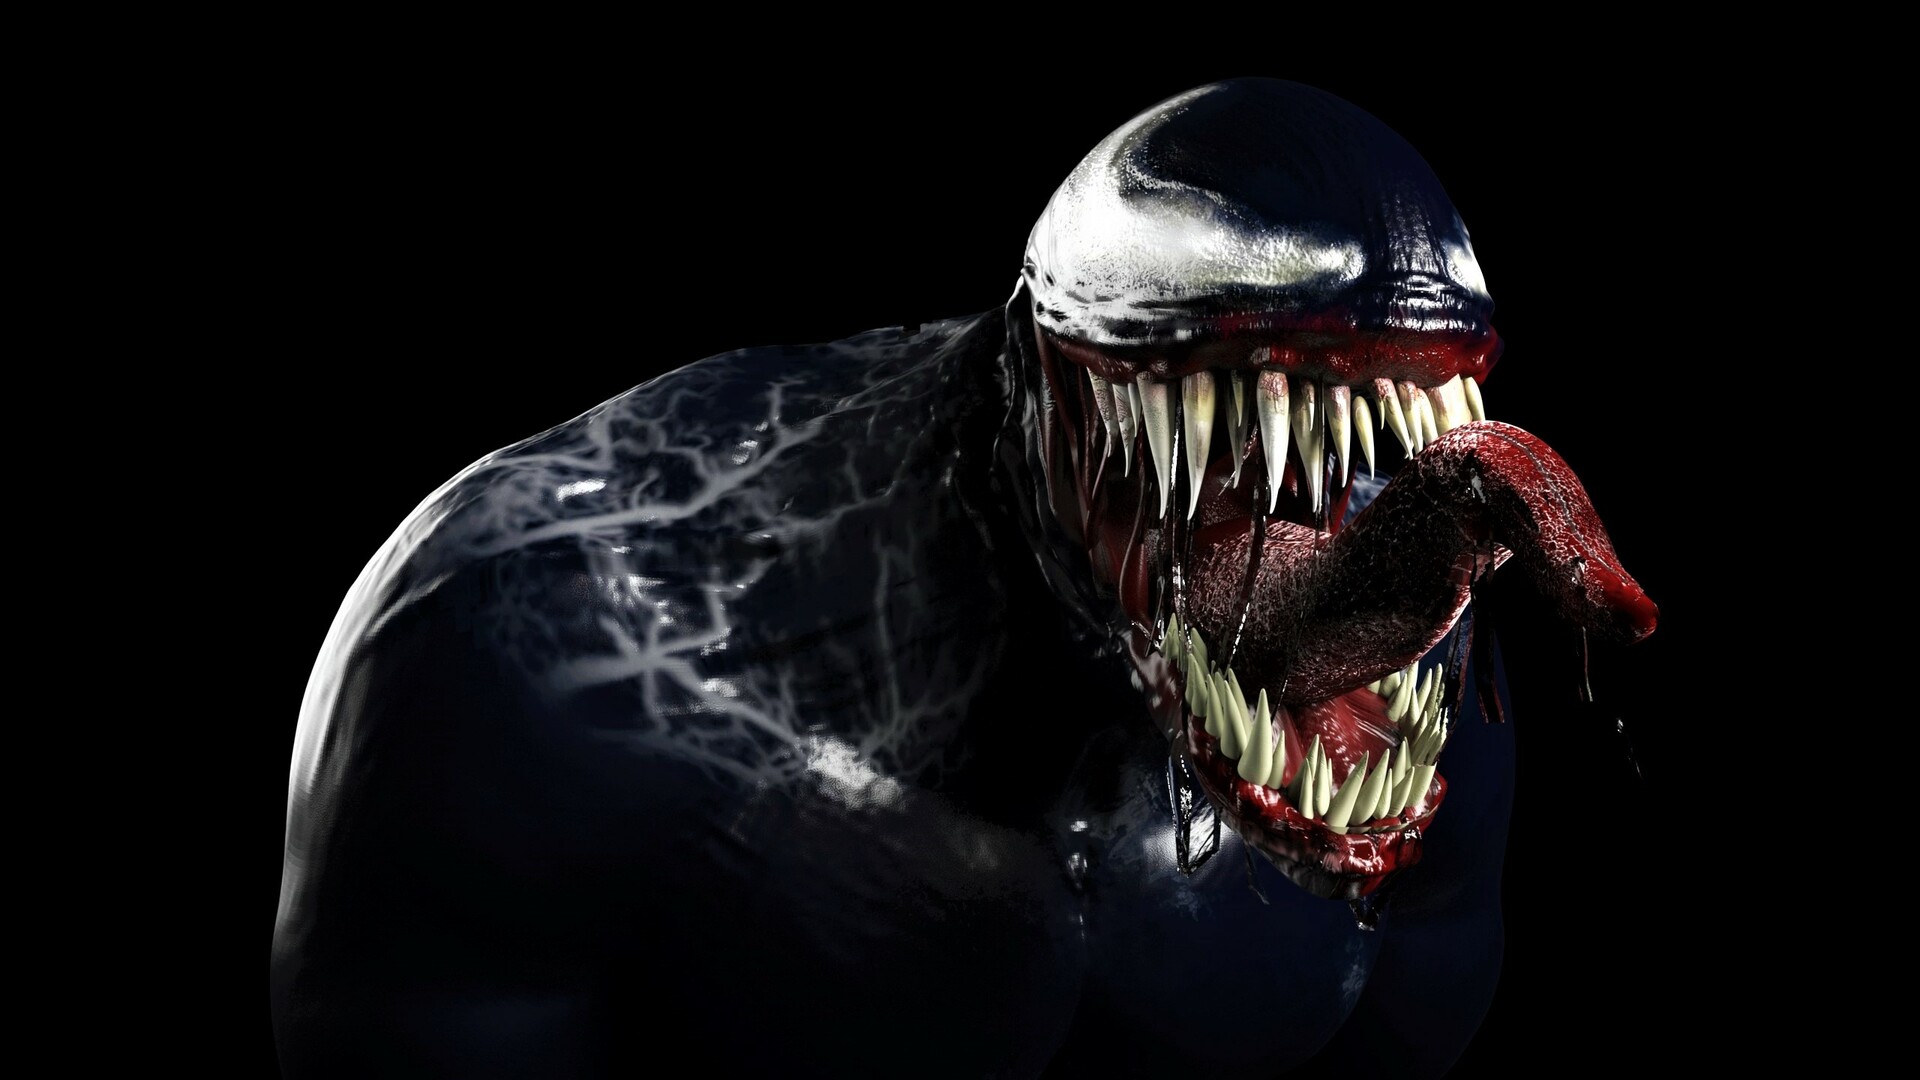 3D fan art venom modeling, texture and rendering work. 